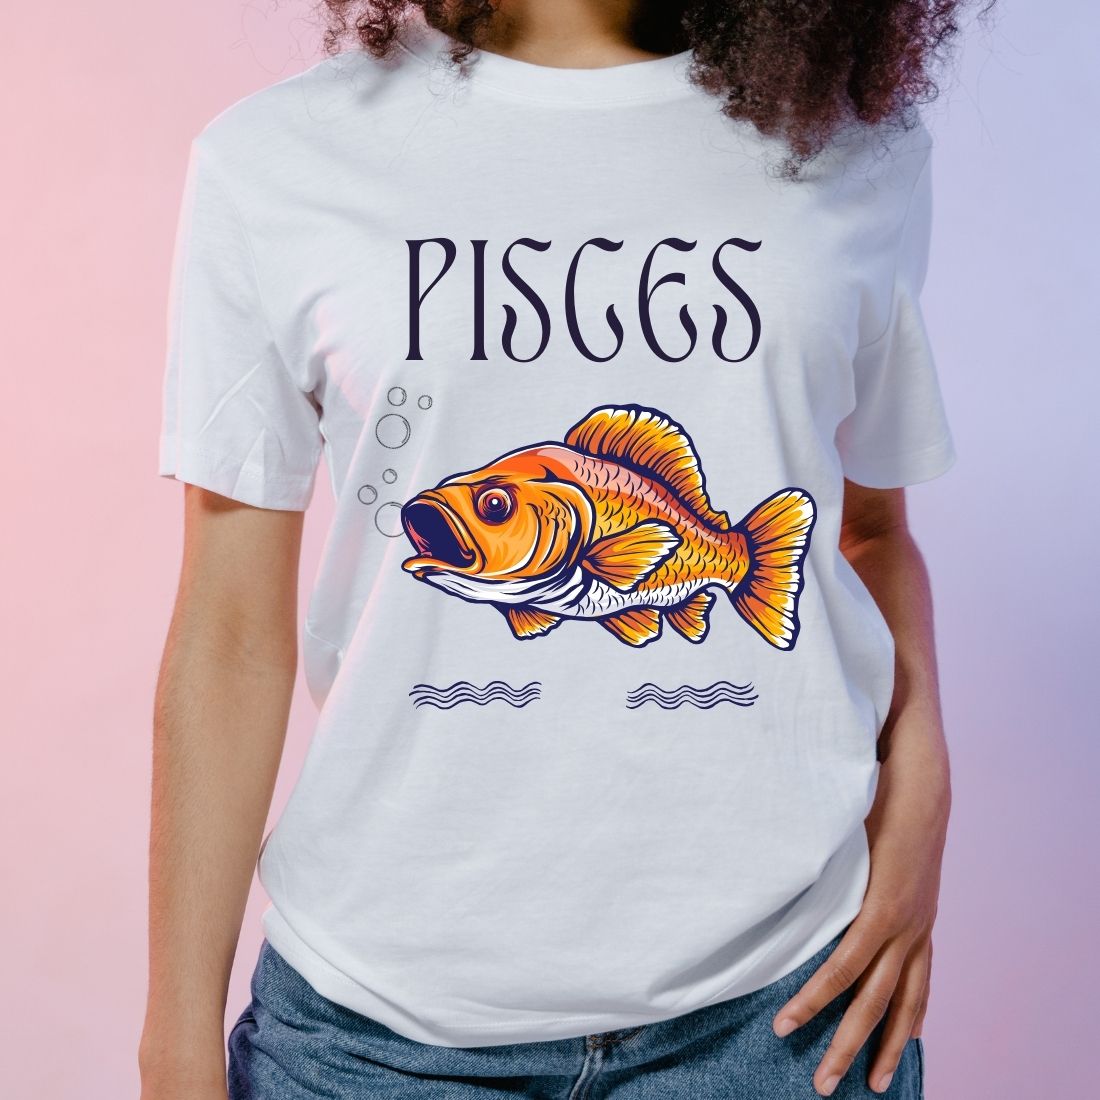 Pisces t-shirt design cover image.